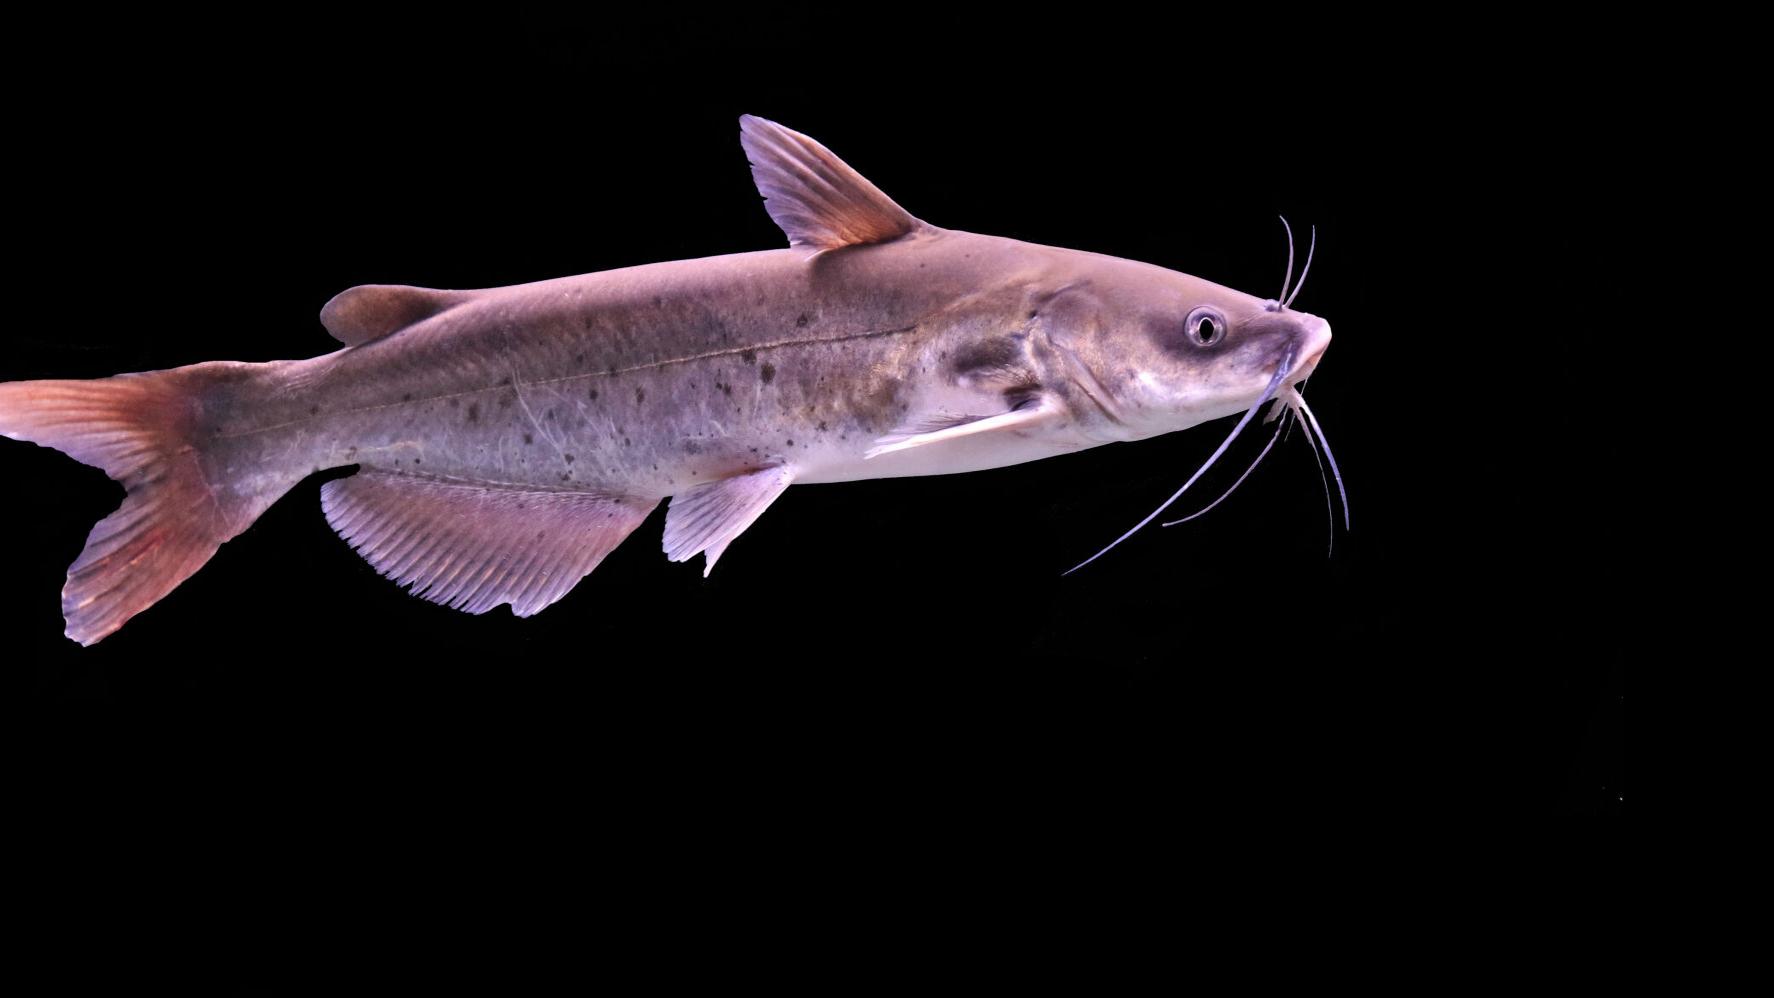 Catching Louisiana Summer Bluegill and Catfish - Catching Catfish on Limb  Lines 